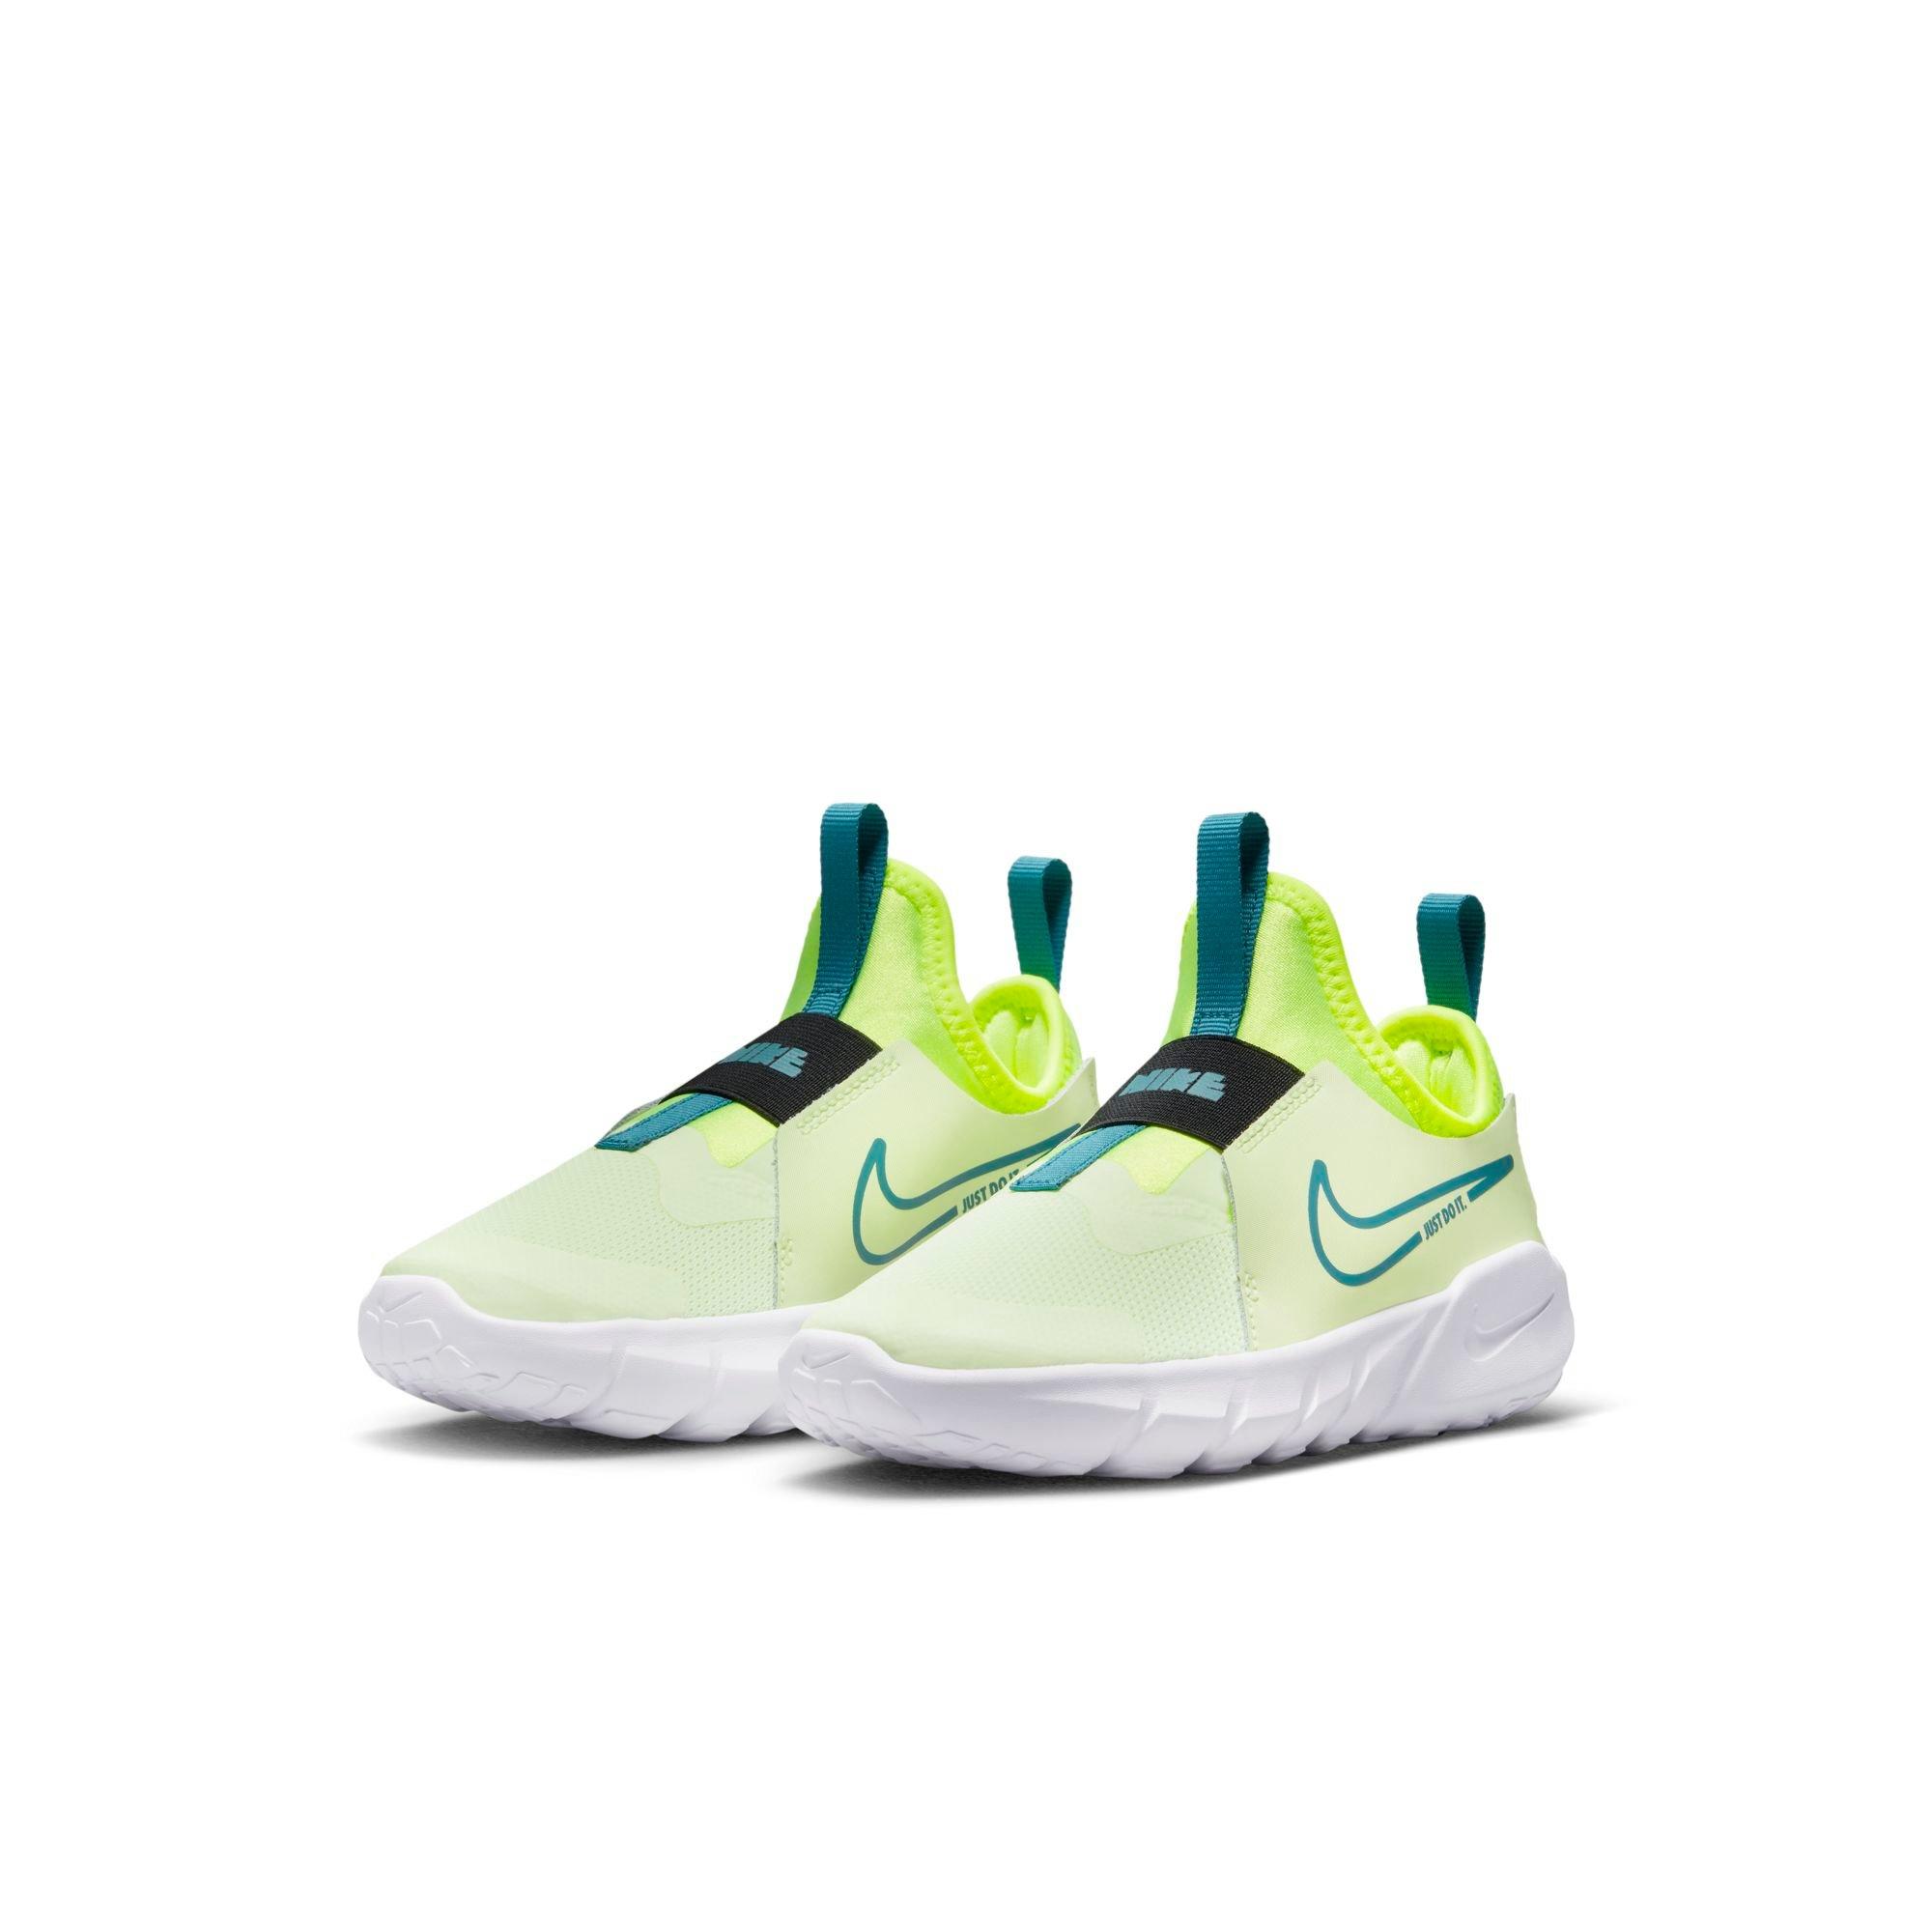 Rechtsaf Verplaatsing Verzoekschrift Nike Flex Runner 2 "Barely Volt/Bright Spruce/Volt/Black" Preschool Boys'  Shoe